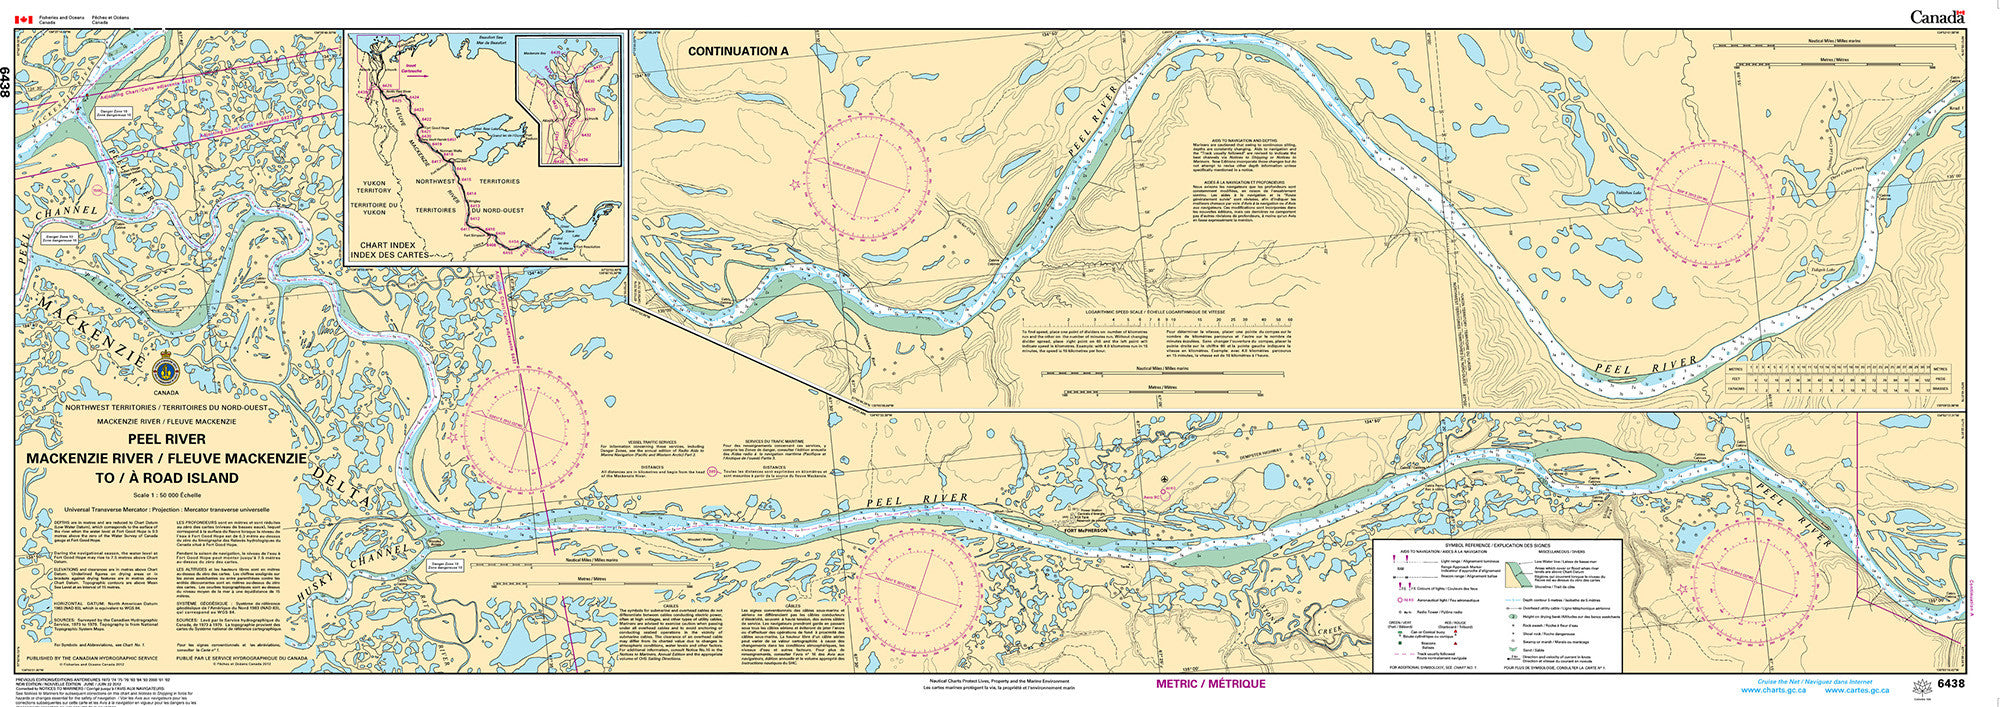 Canadian Hydrographic Service Nautical Chart CHS6438: Peel River, Mackenzie River/Fleuve Mackenzie to/à Road Island